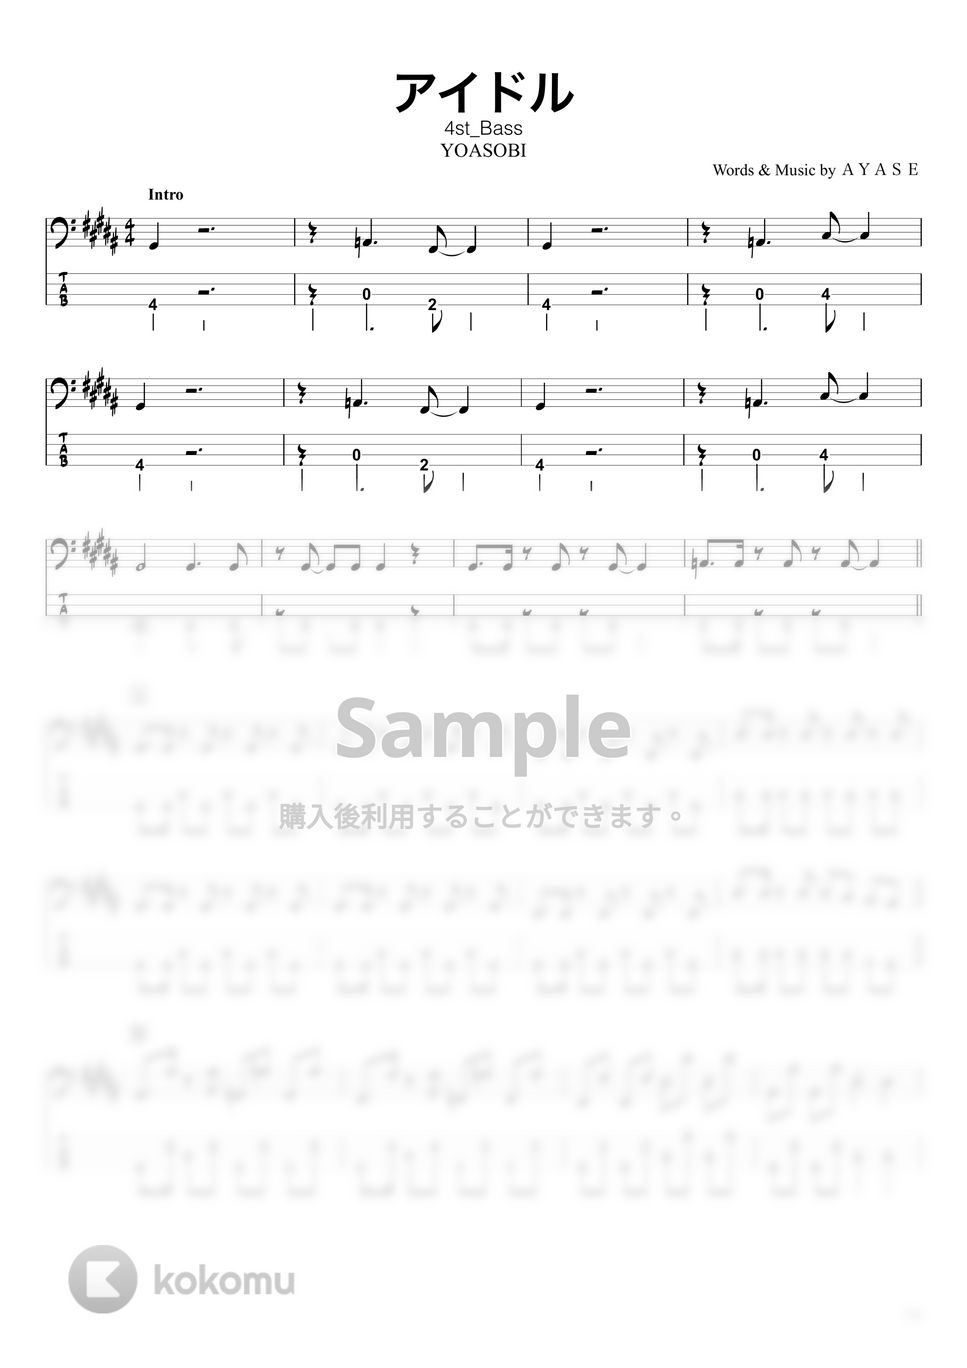 YOASOBI - アイドル (ベースTAB譜☆4弦ベース対応) by swbass